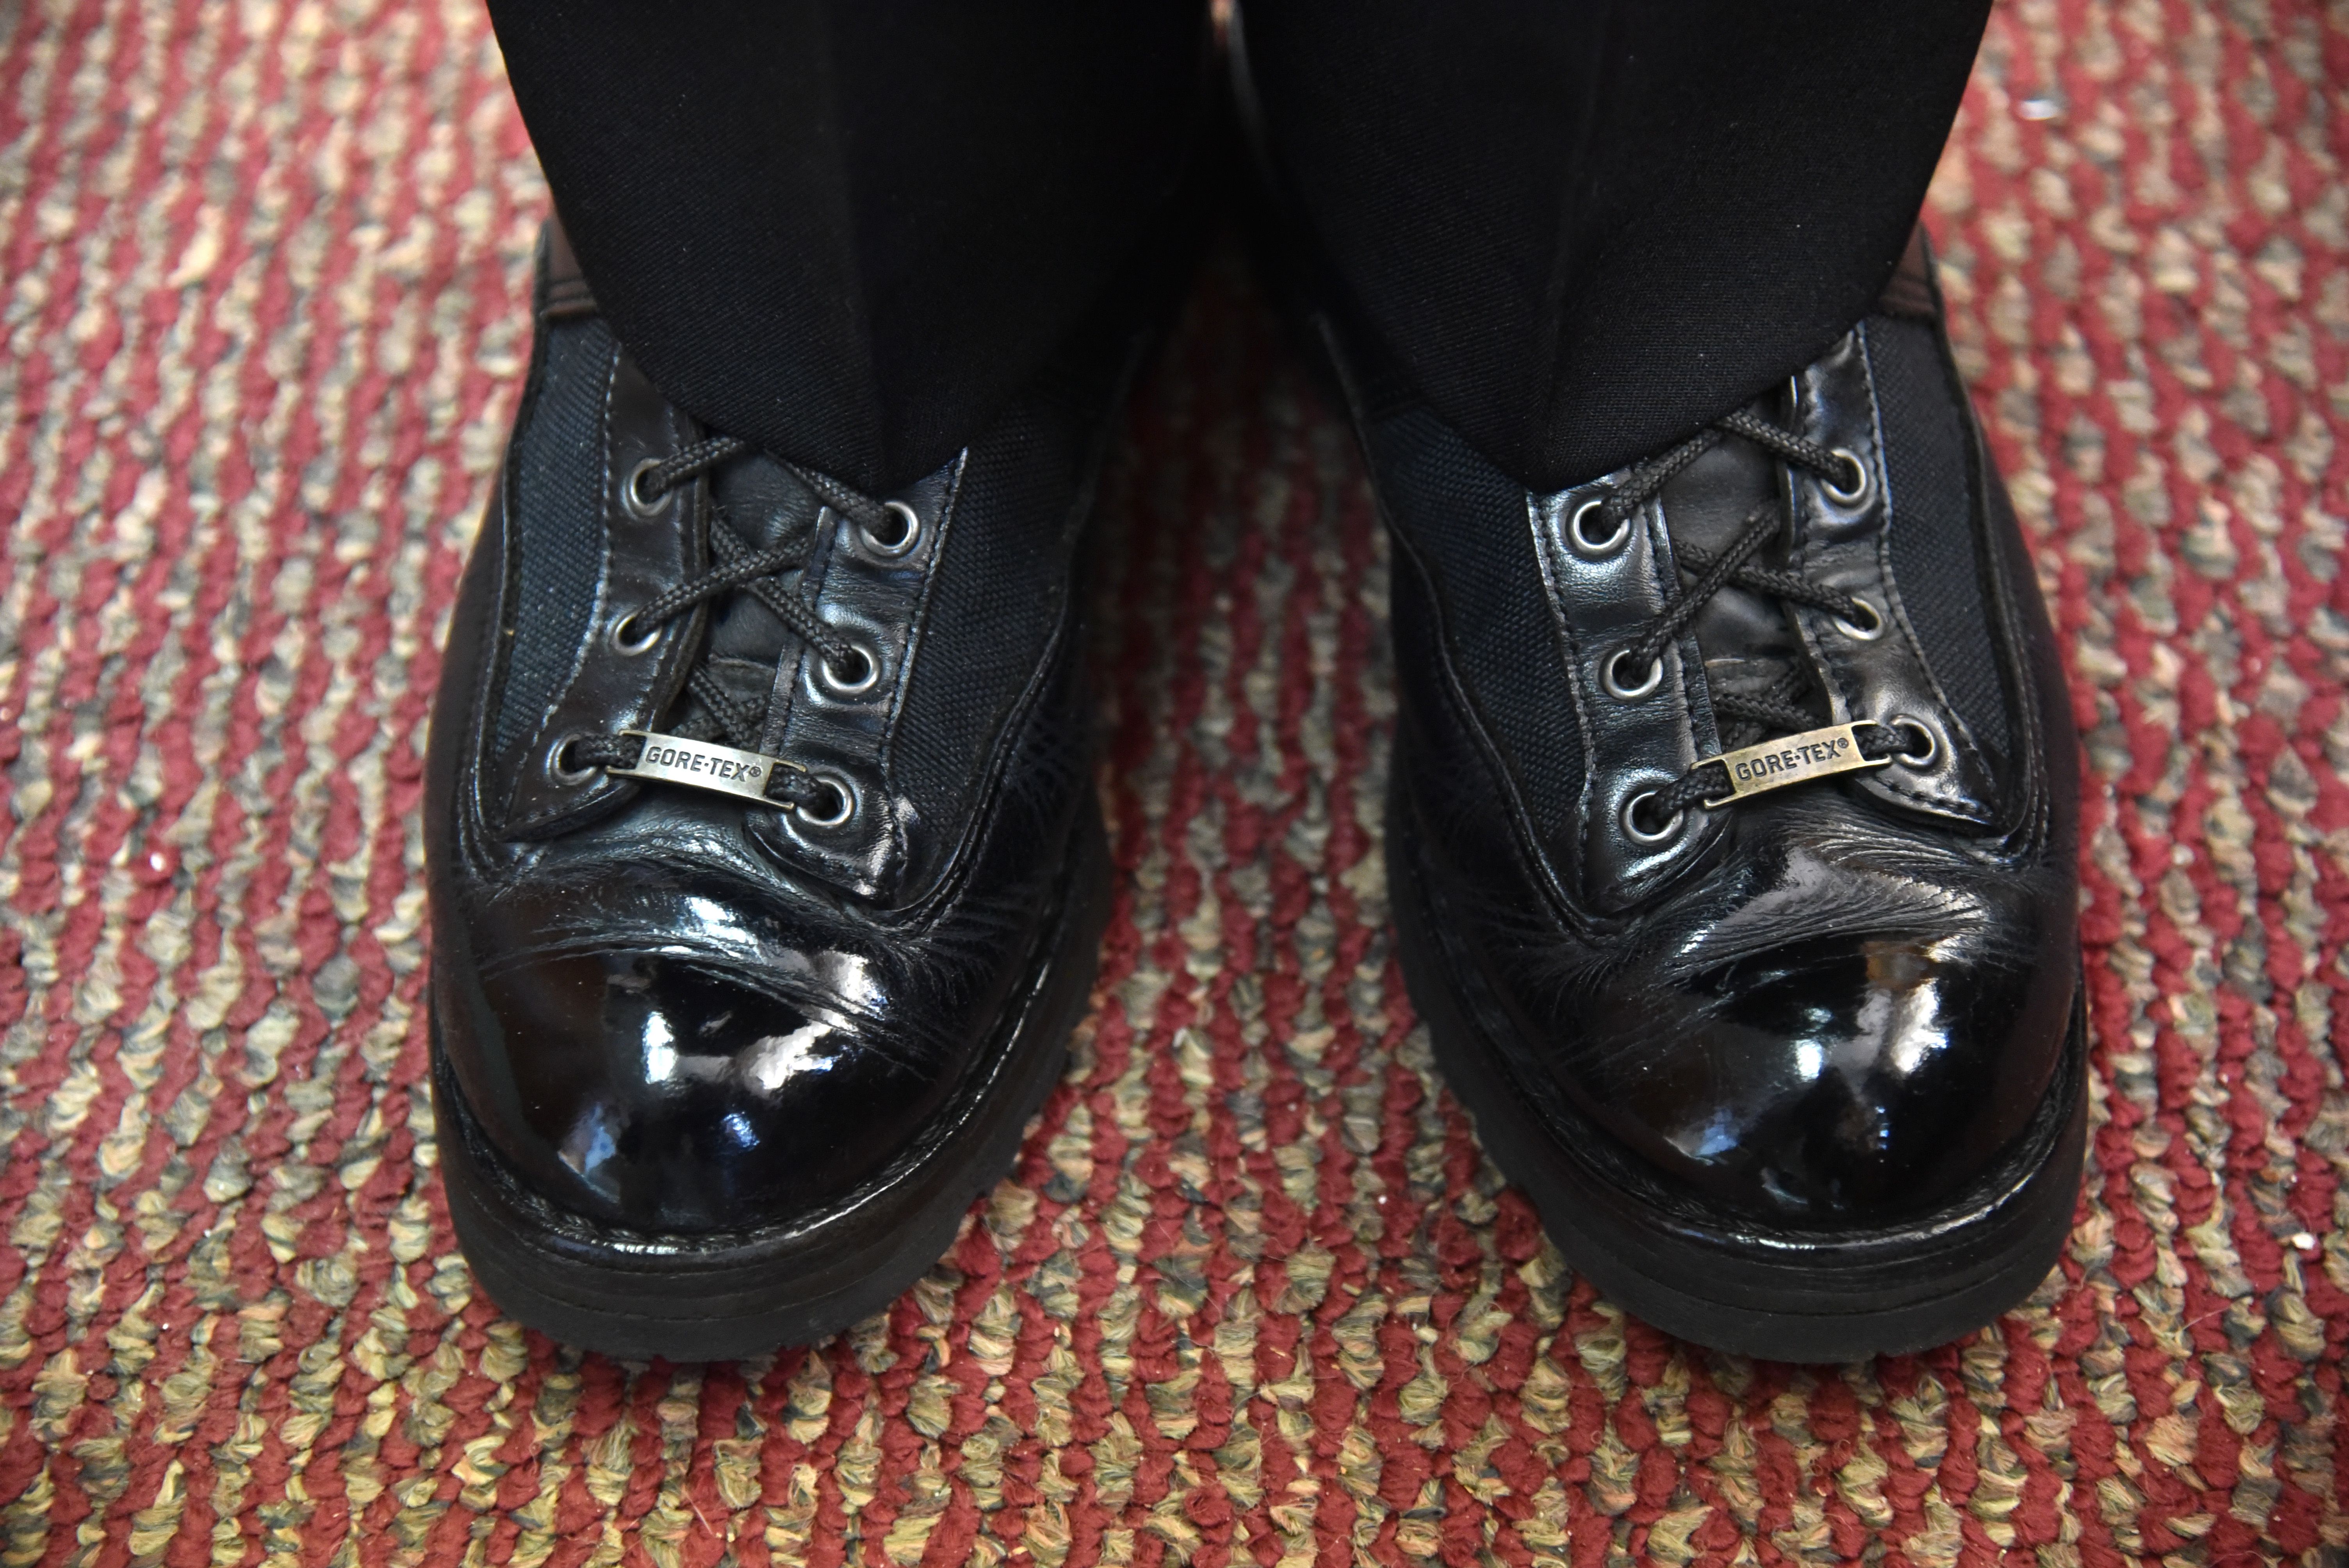 Park Road Shoe Repair - Tuxedo @chritianlouboutin Shoes with